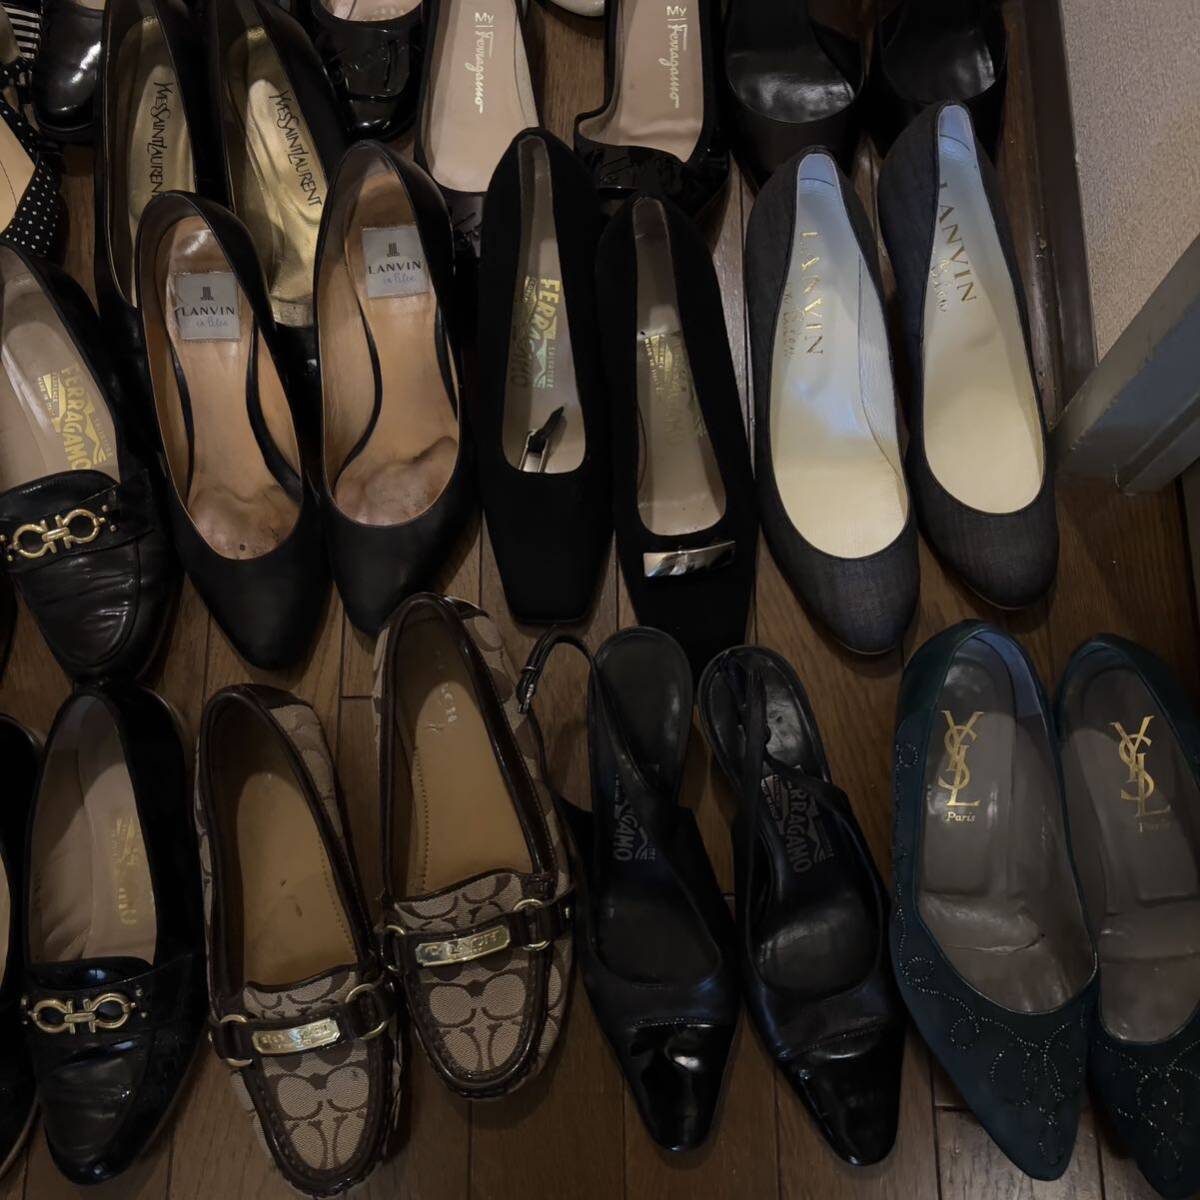 1 start set sale 30 pairs set brand shoes pumps sandals Ferragamo YSL PRADA LANVIN COACH ARMANI LANCEL kate spade Junk 